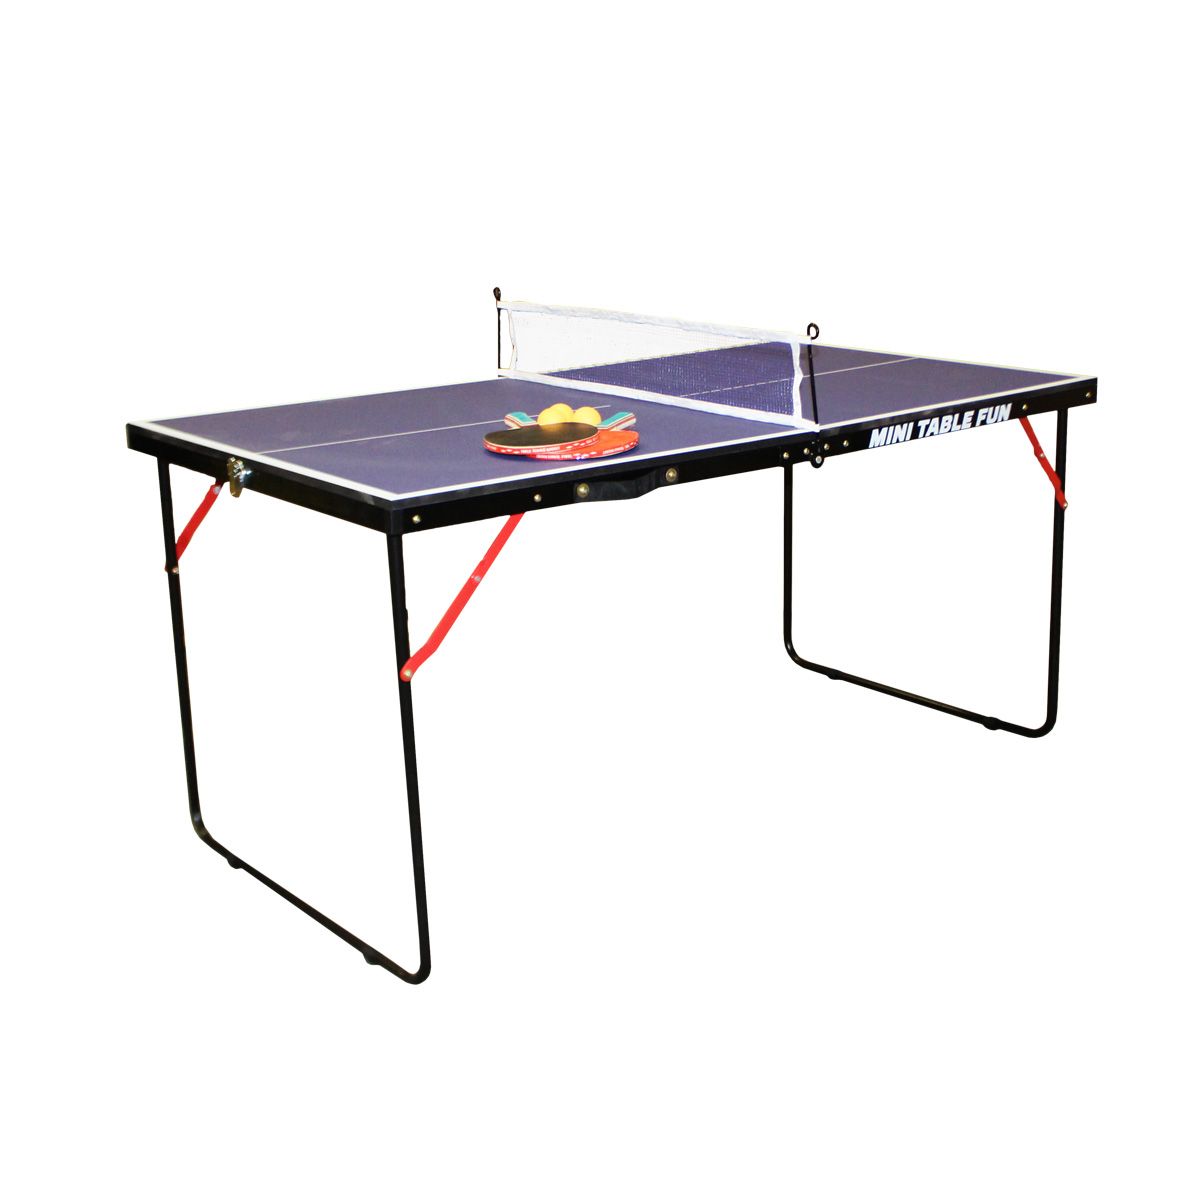 Mini Stół do Ping-Pong'a MASTER Midi Table Fun Kup z olx!